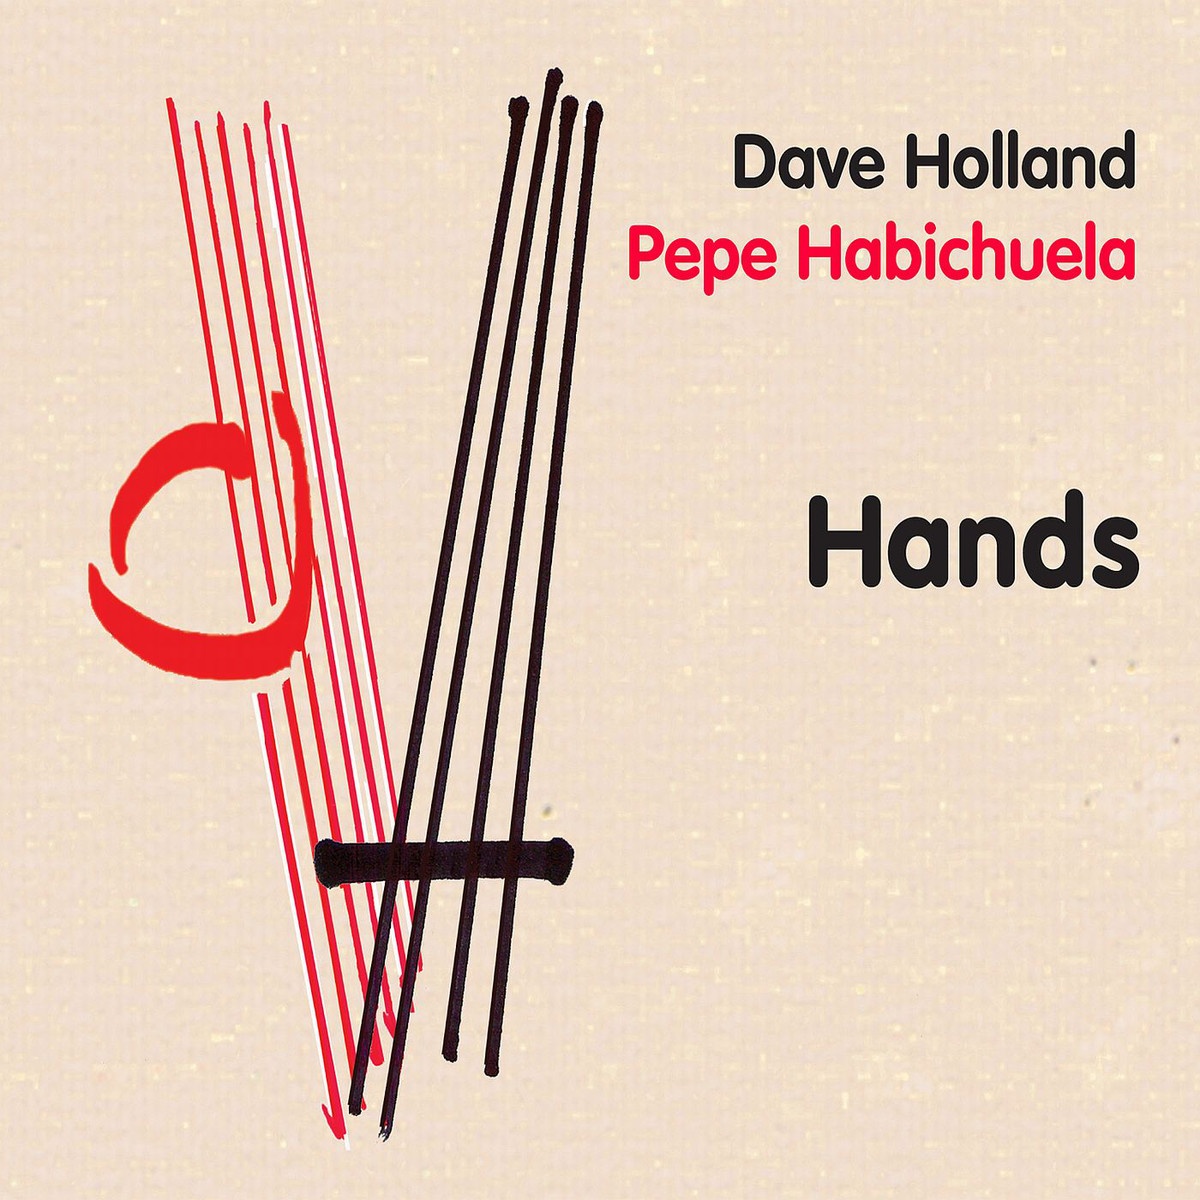 Hands (Fandango De Huelva)